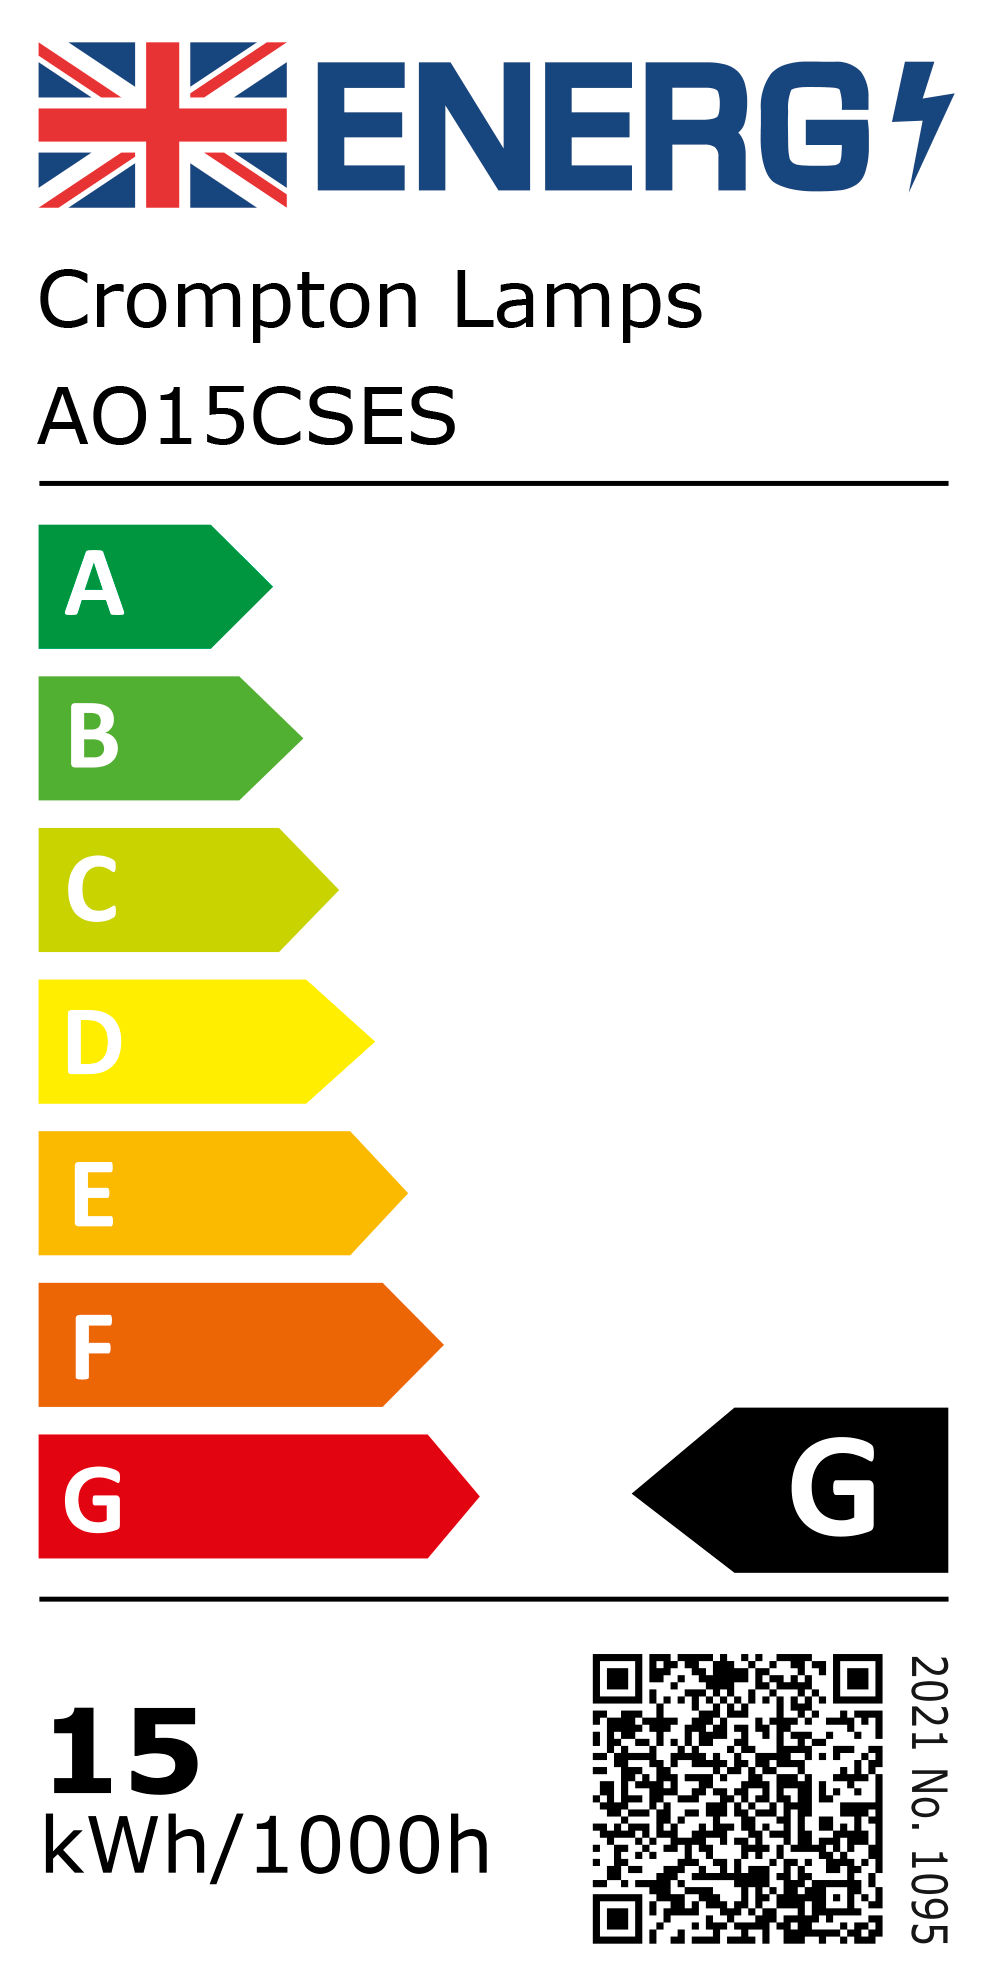 New 2021 Energy Rating Label: Stock Code AO15CSES